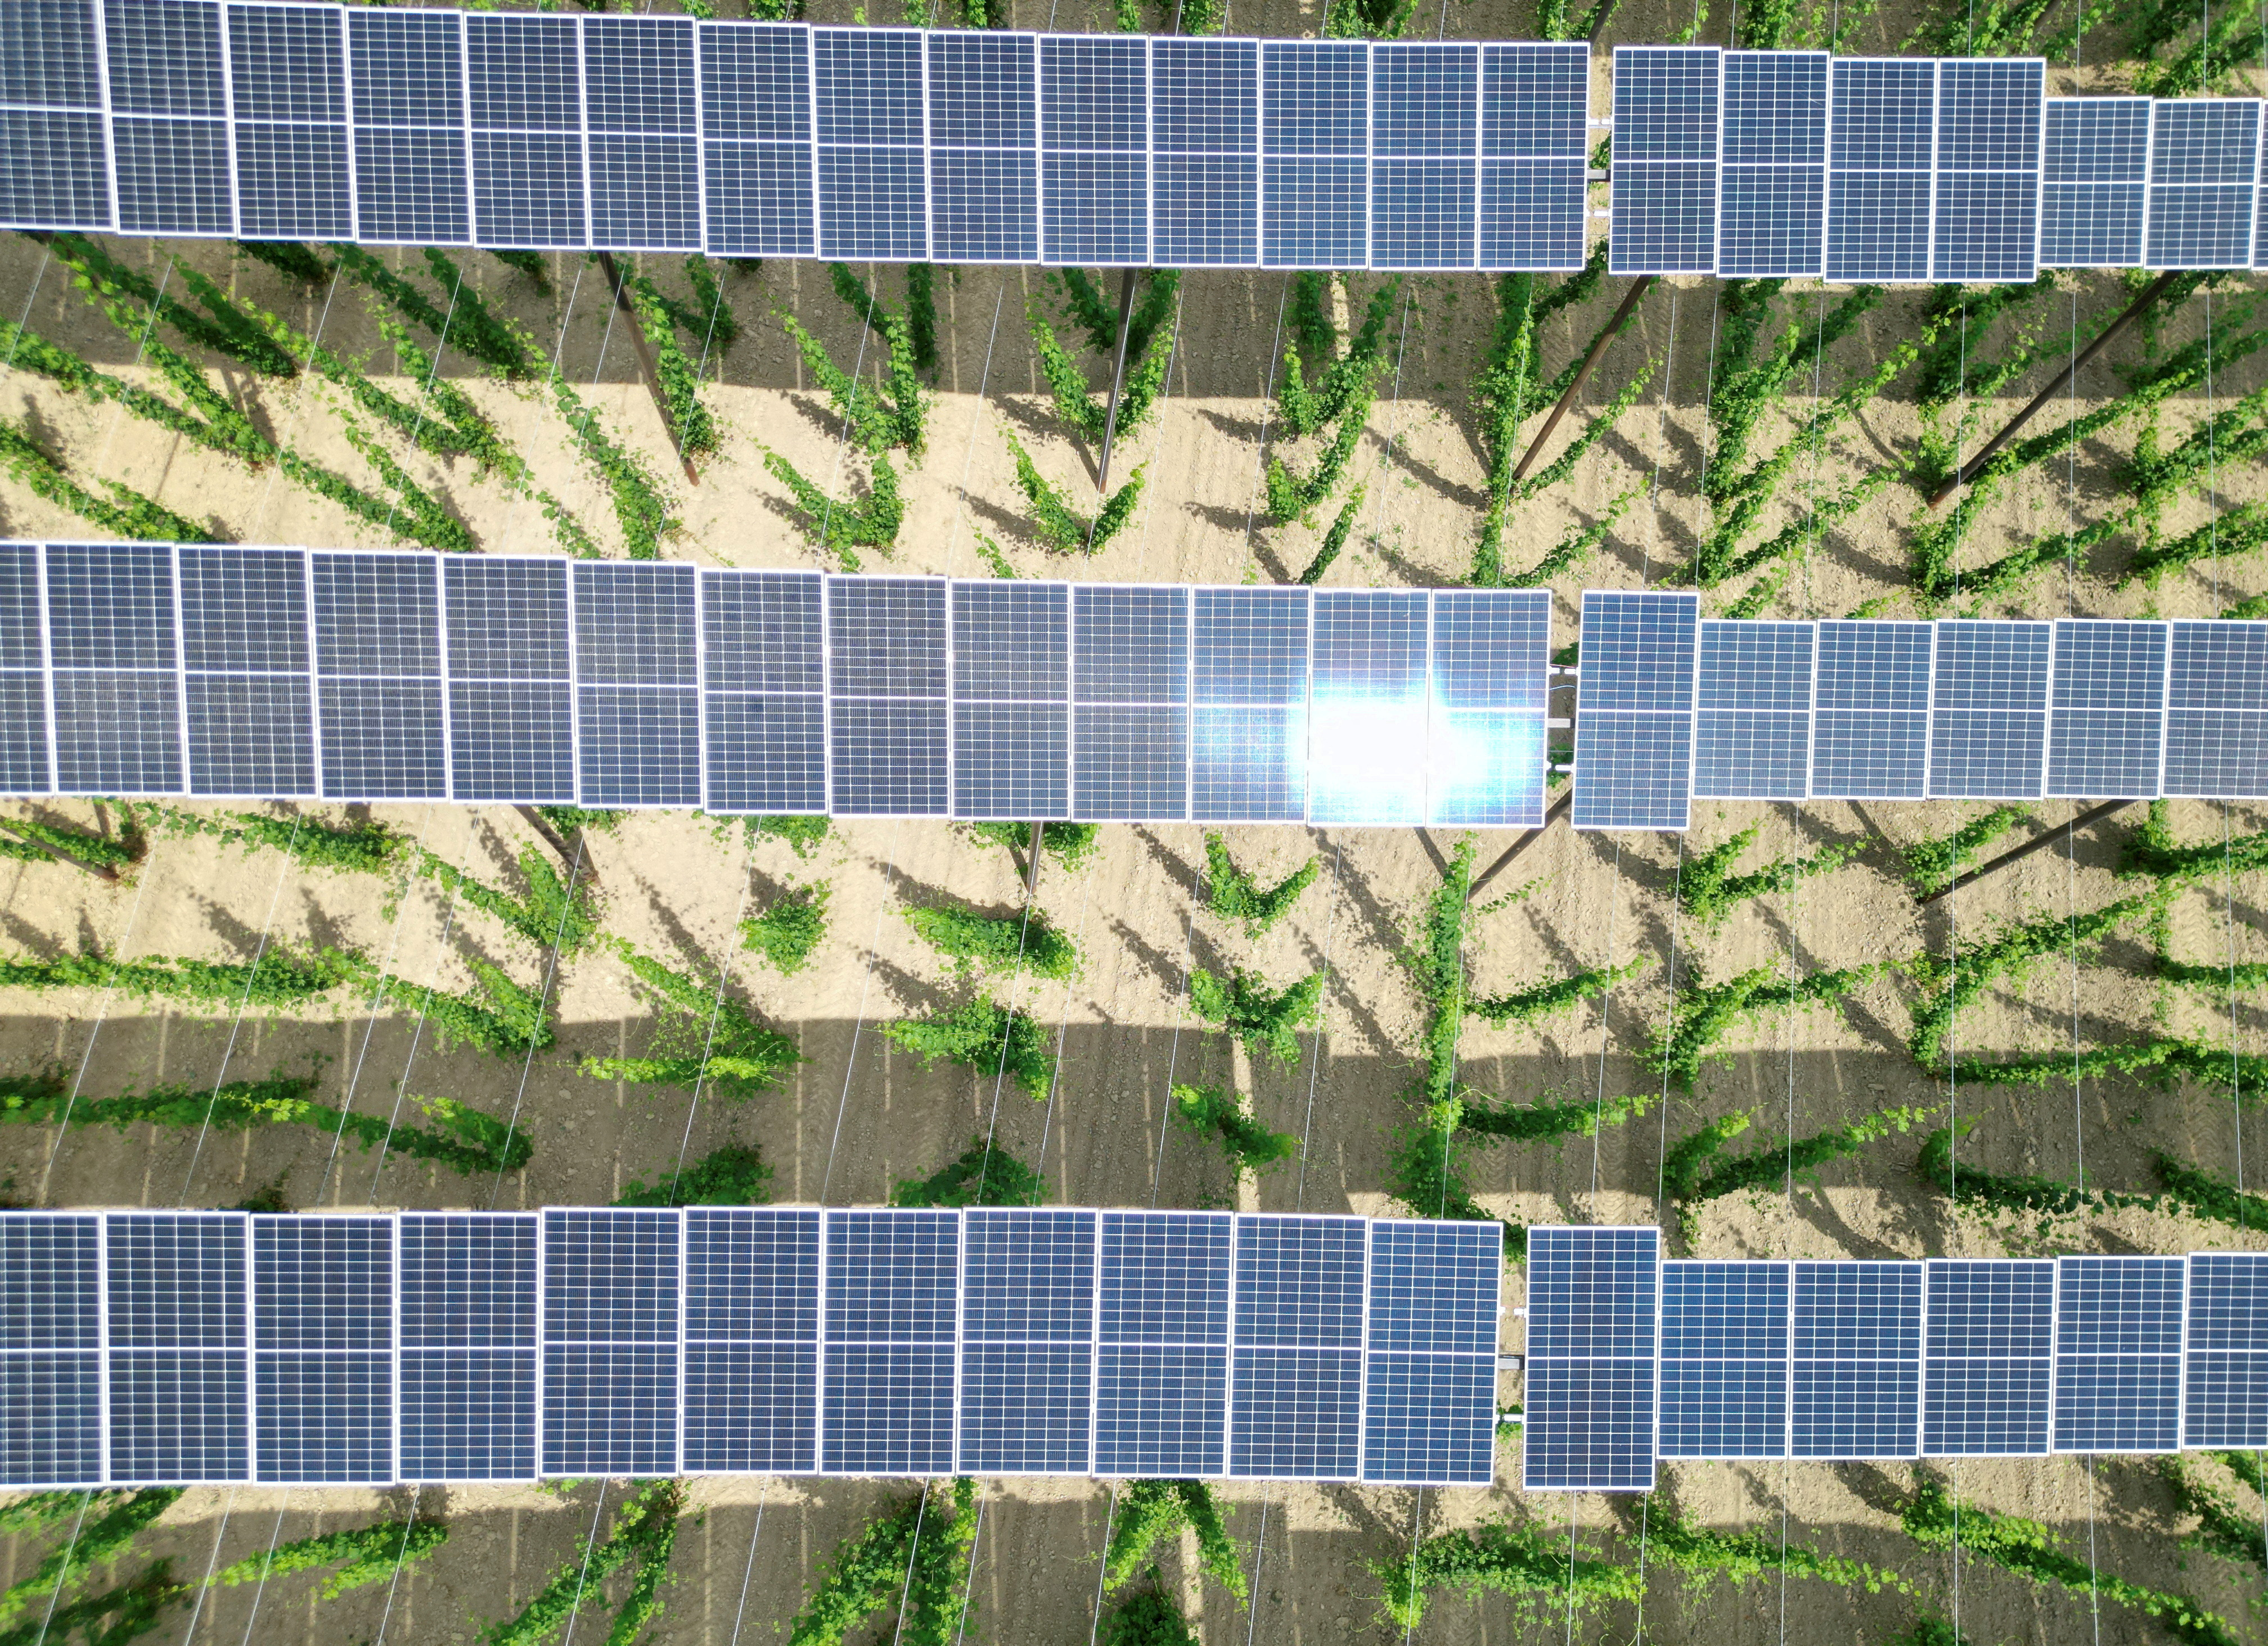 Solar panels are seen atop a hops plantation in the Bavarian Holledau region